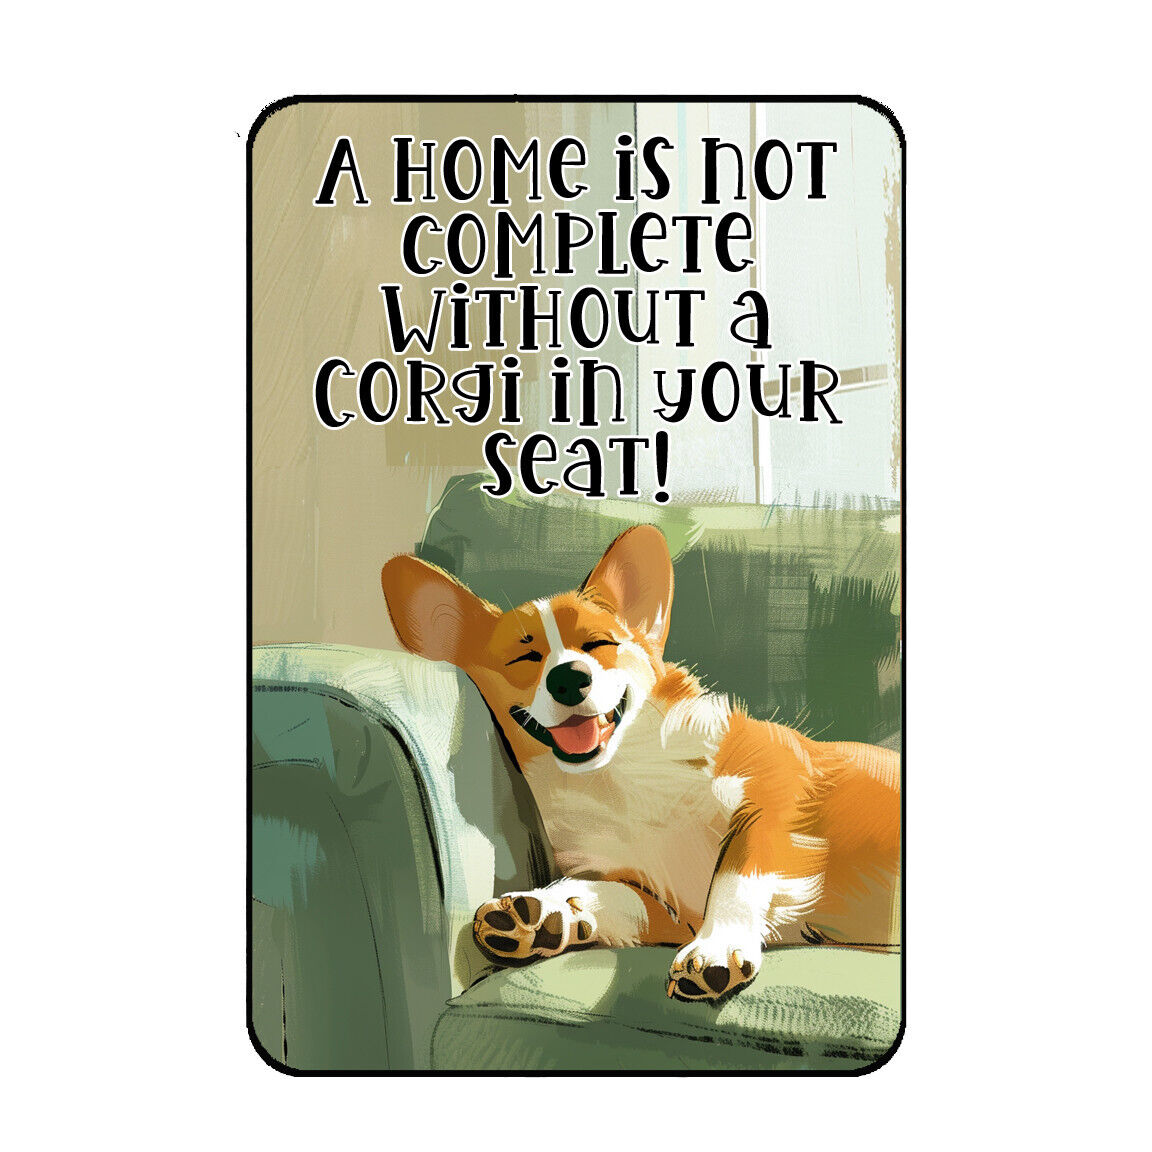 Corgi Dog Fridge Magnet Spoiled Dog Corgi Family Collectible Gift Magnet